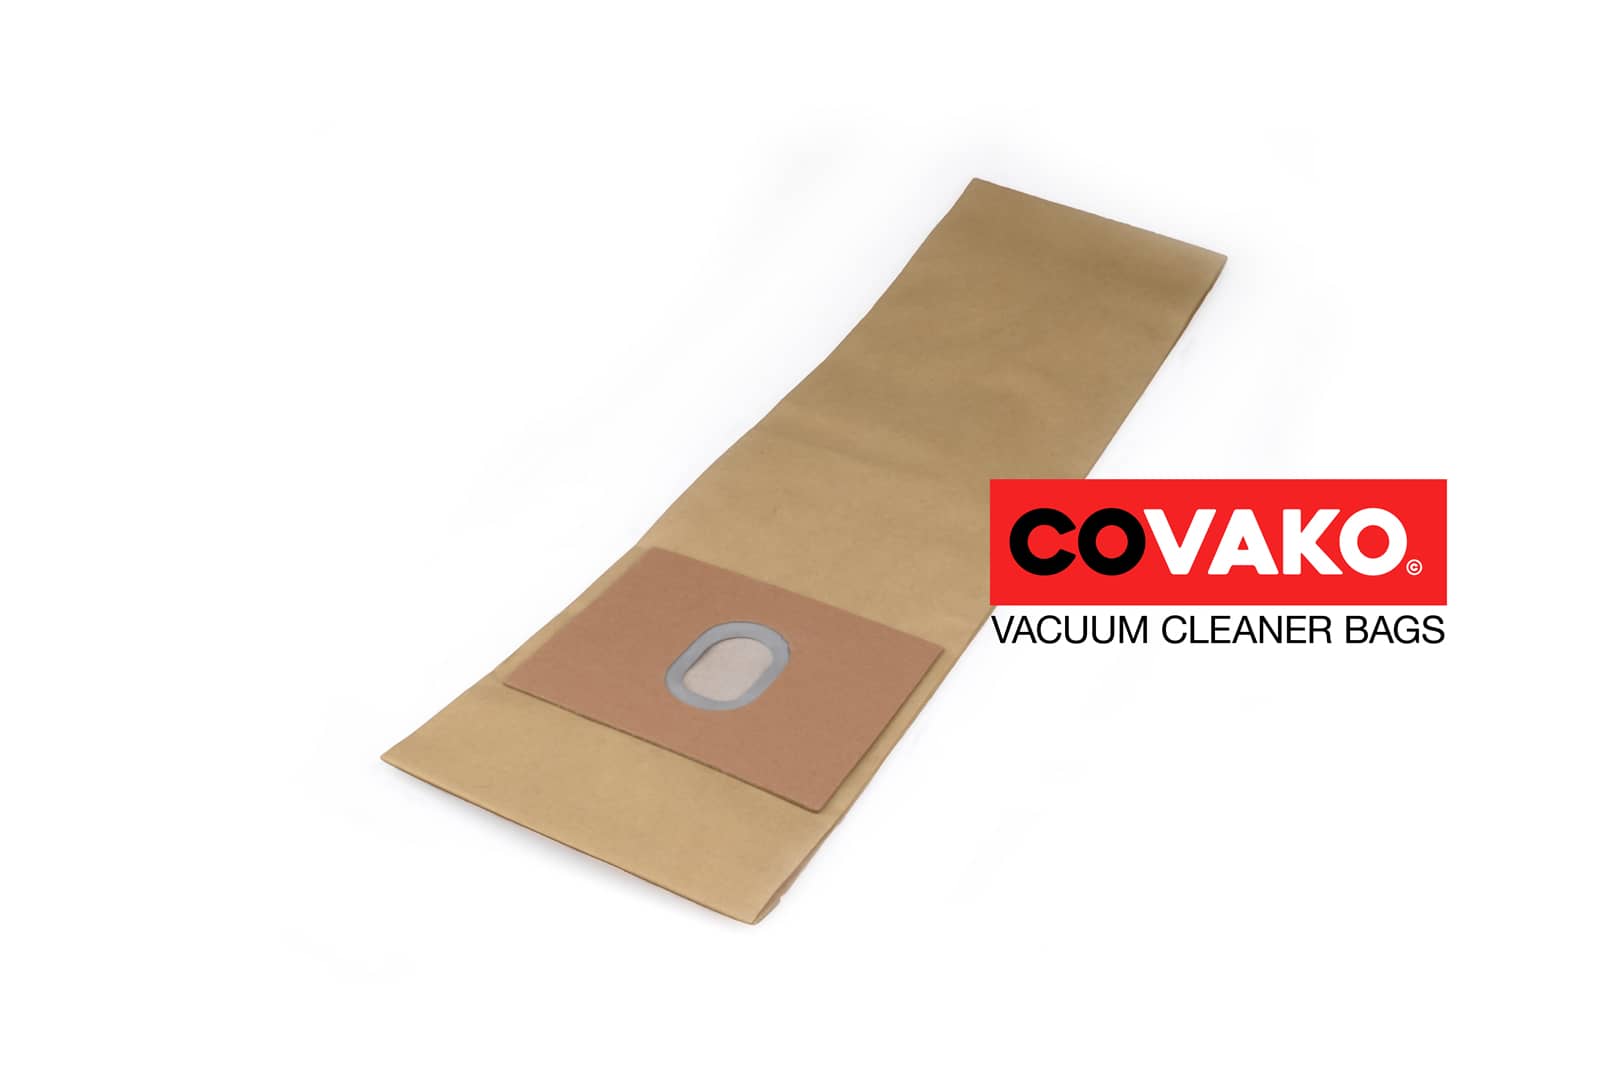 Fakir 275 c / Paper - Fakir vacuum cleaner bags